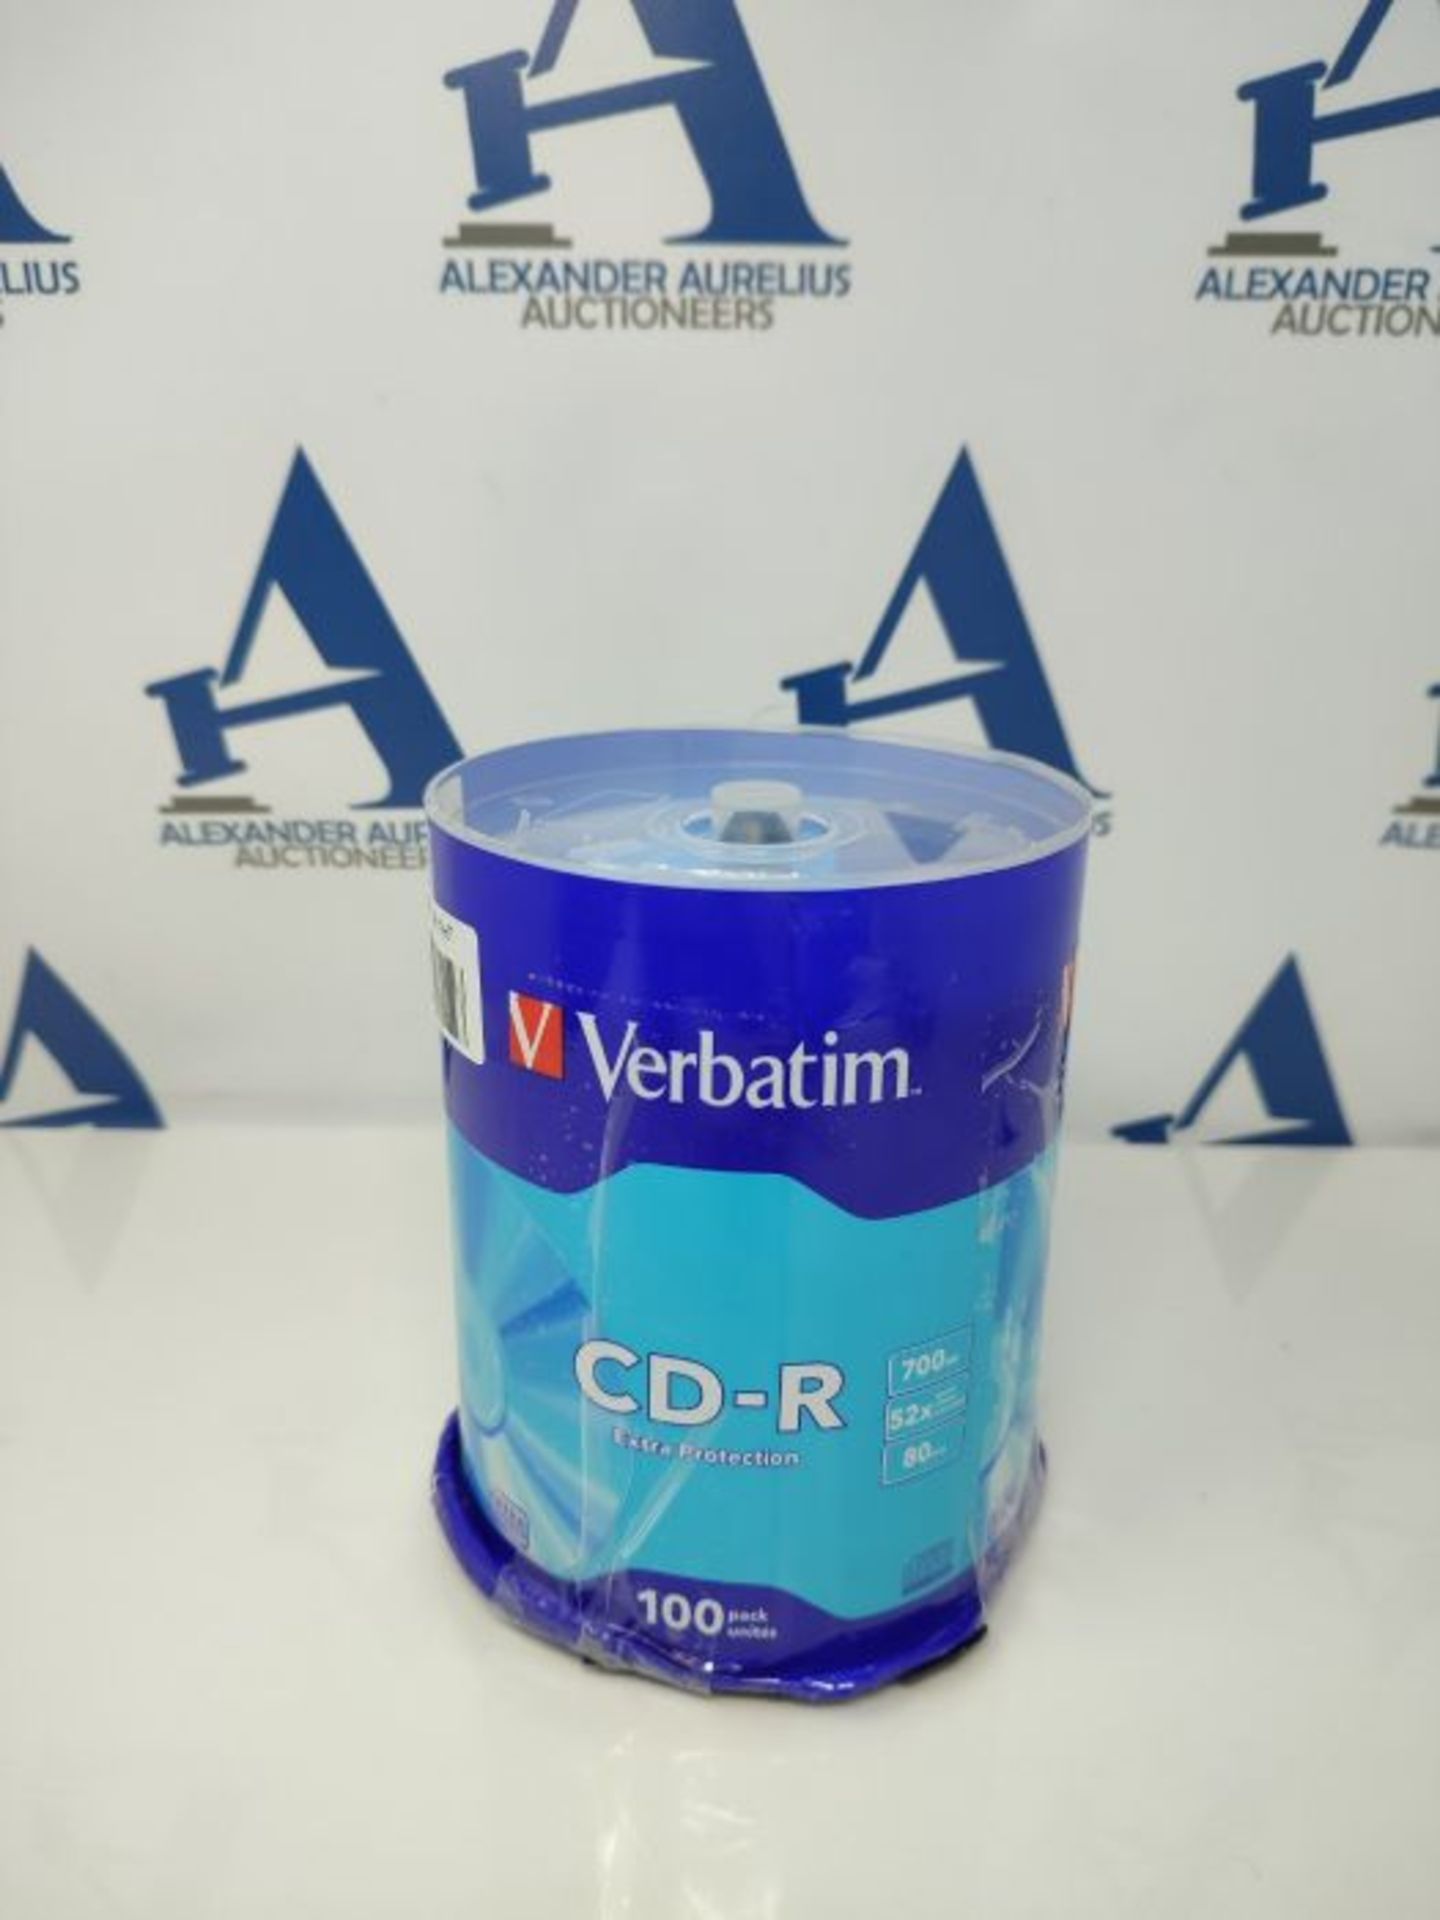 Verbatim 43411 CD-R Extra Protection 700 MB I100erPackSpindelIOberflÃ¤cheweiÃxICDR - Image 2 of 2